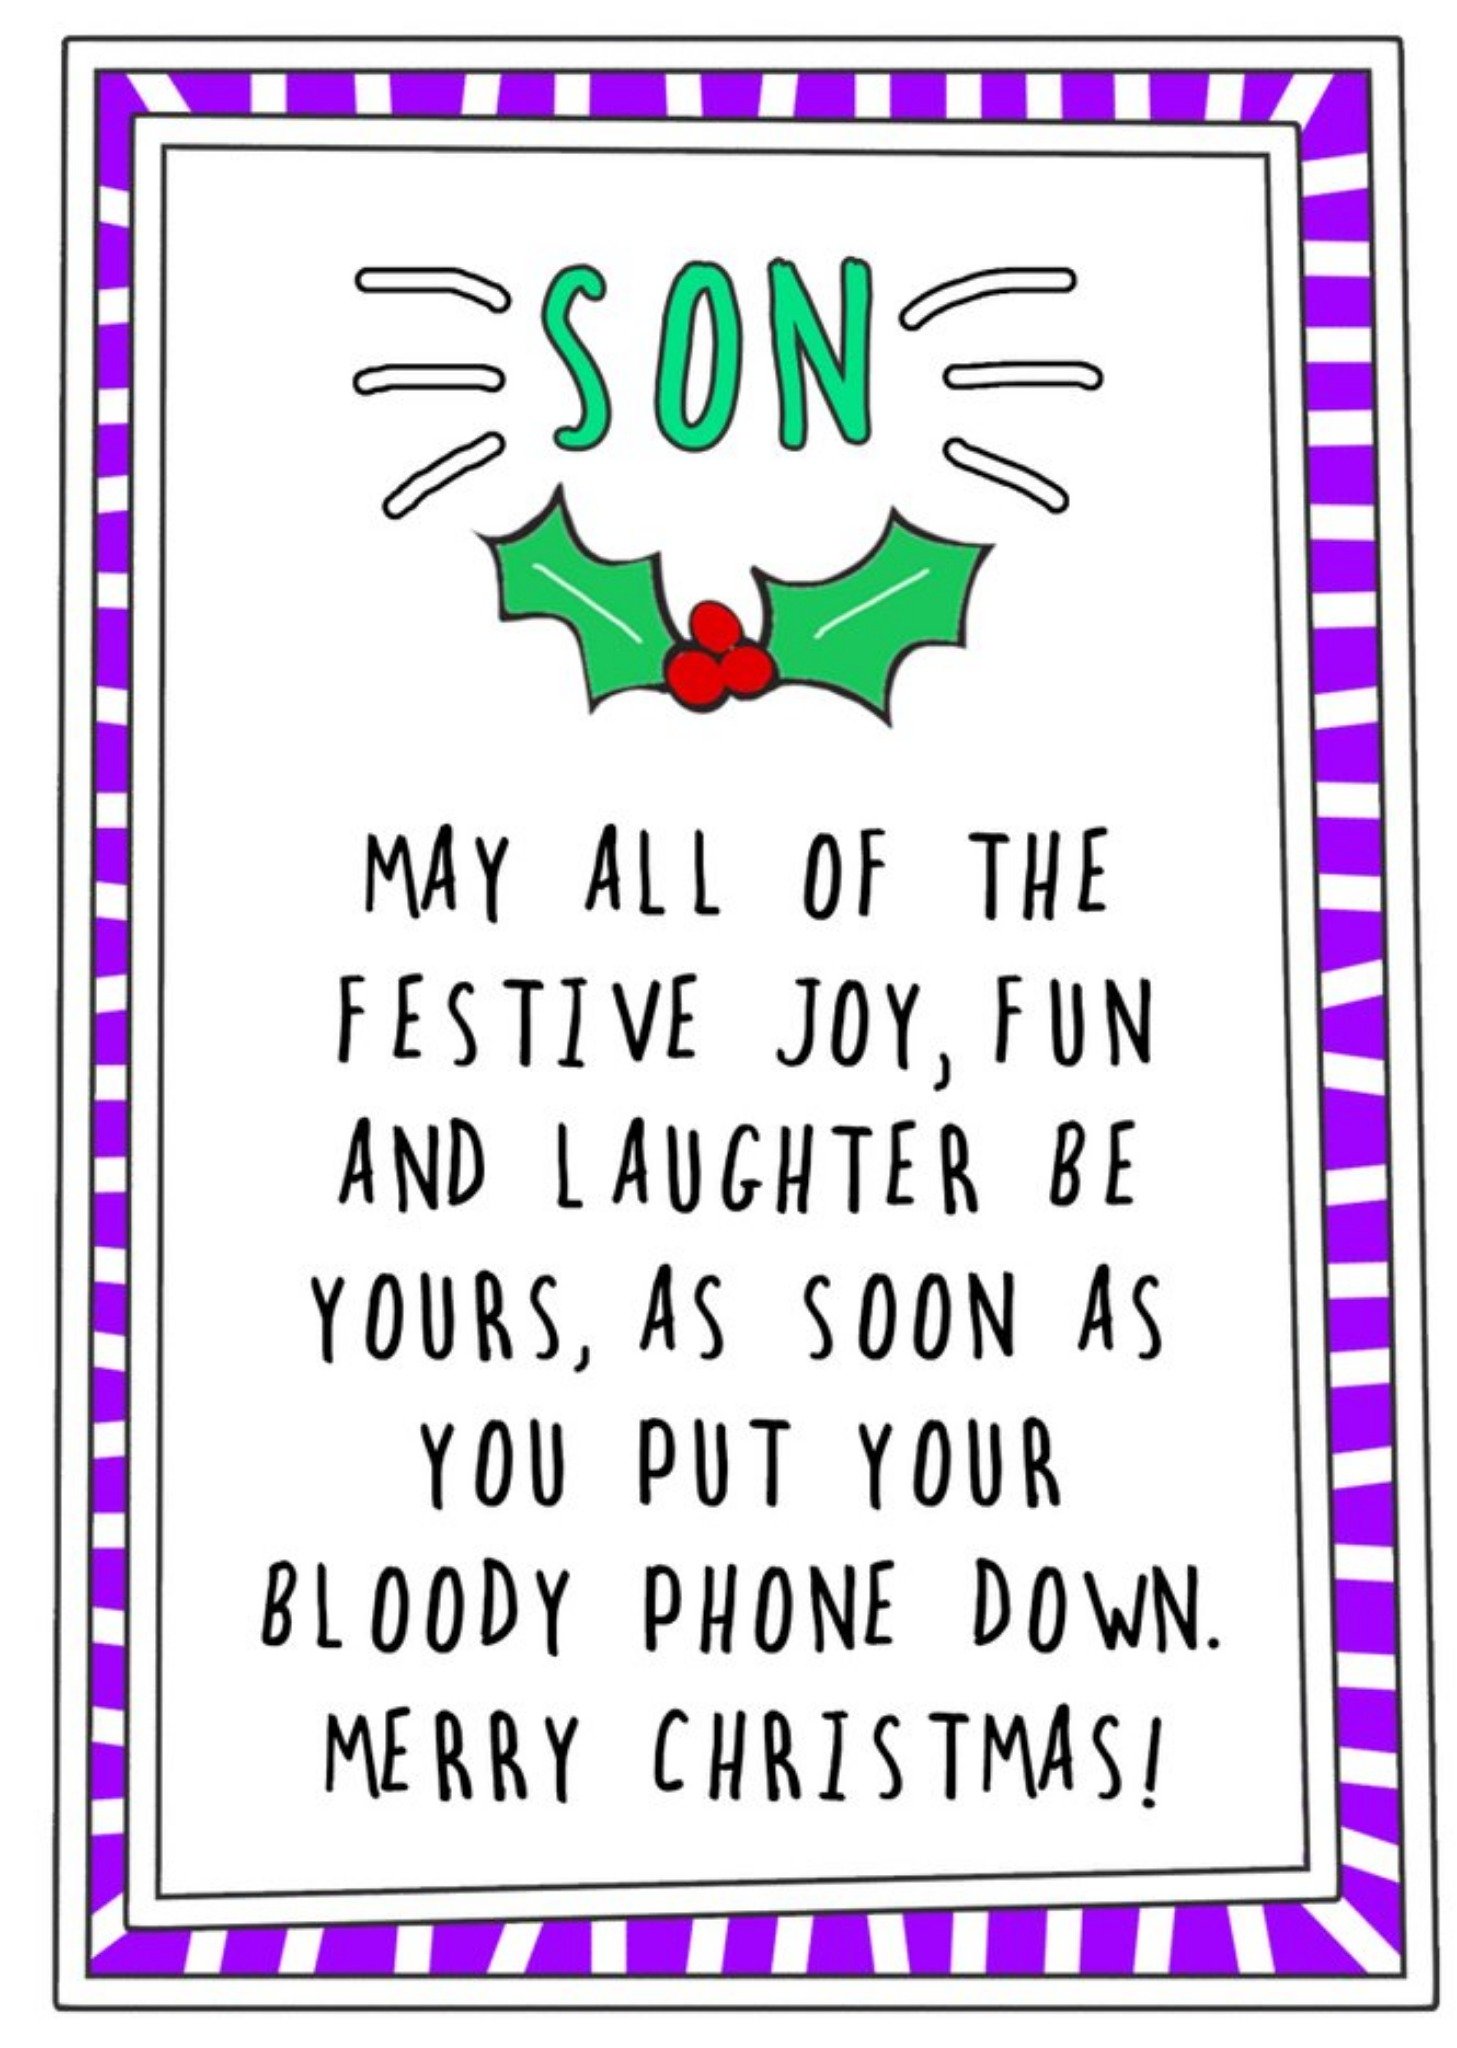 Go La La Funny Son Put Your Phone Down Merry Christmas Card, Large